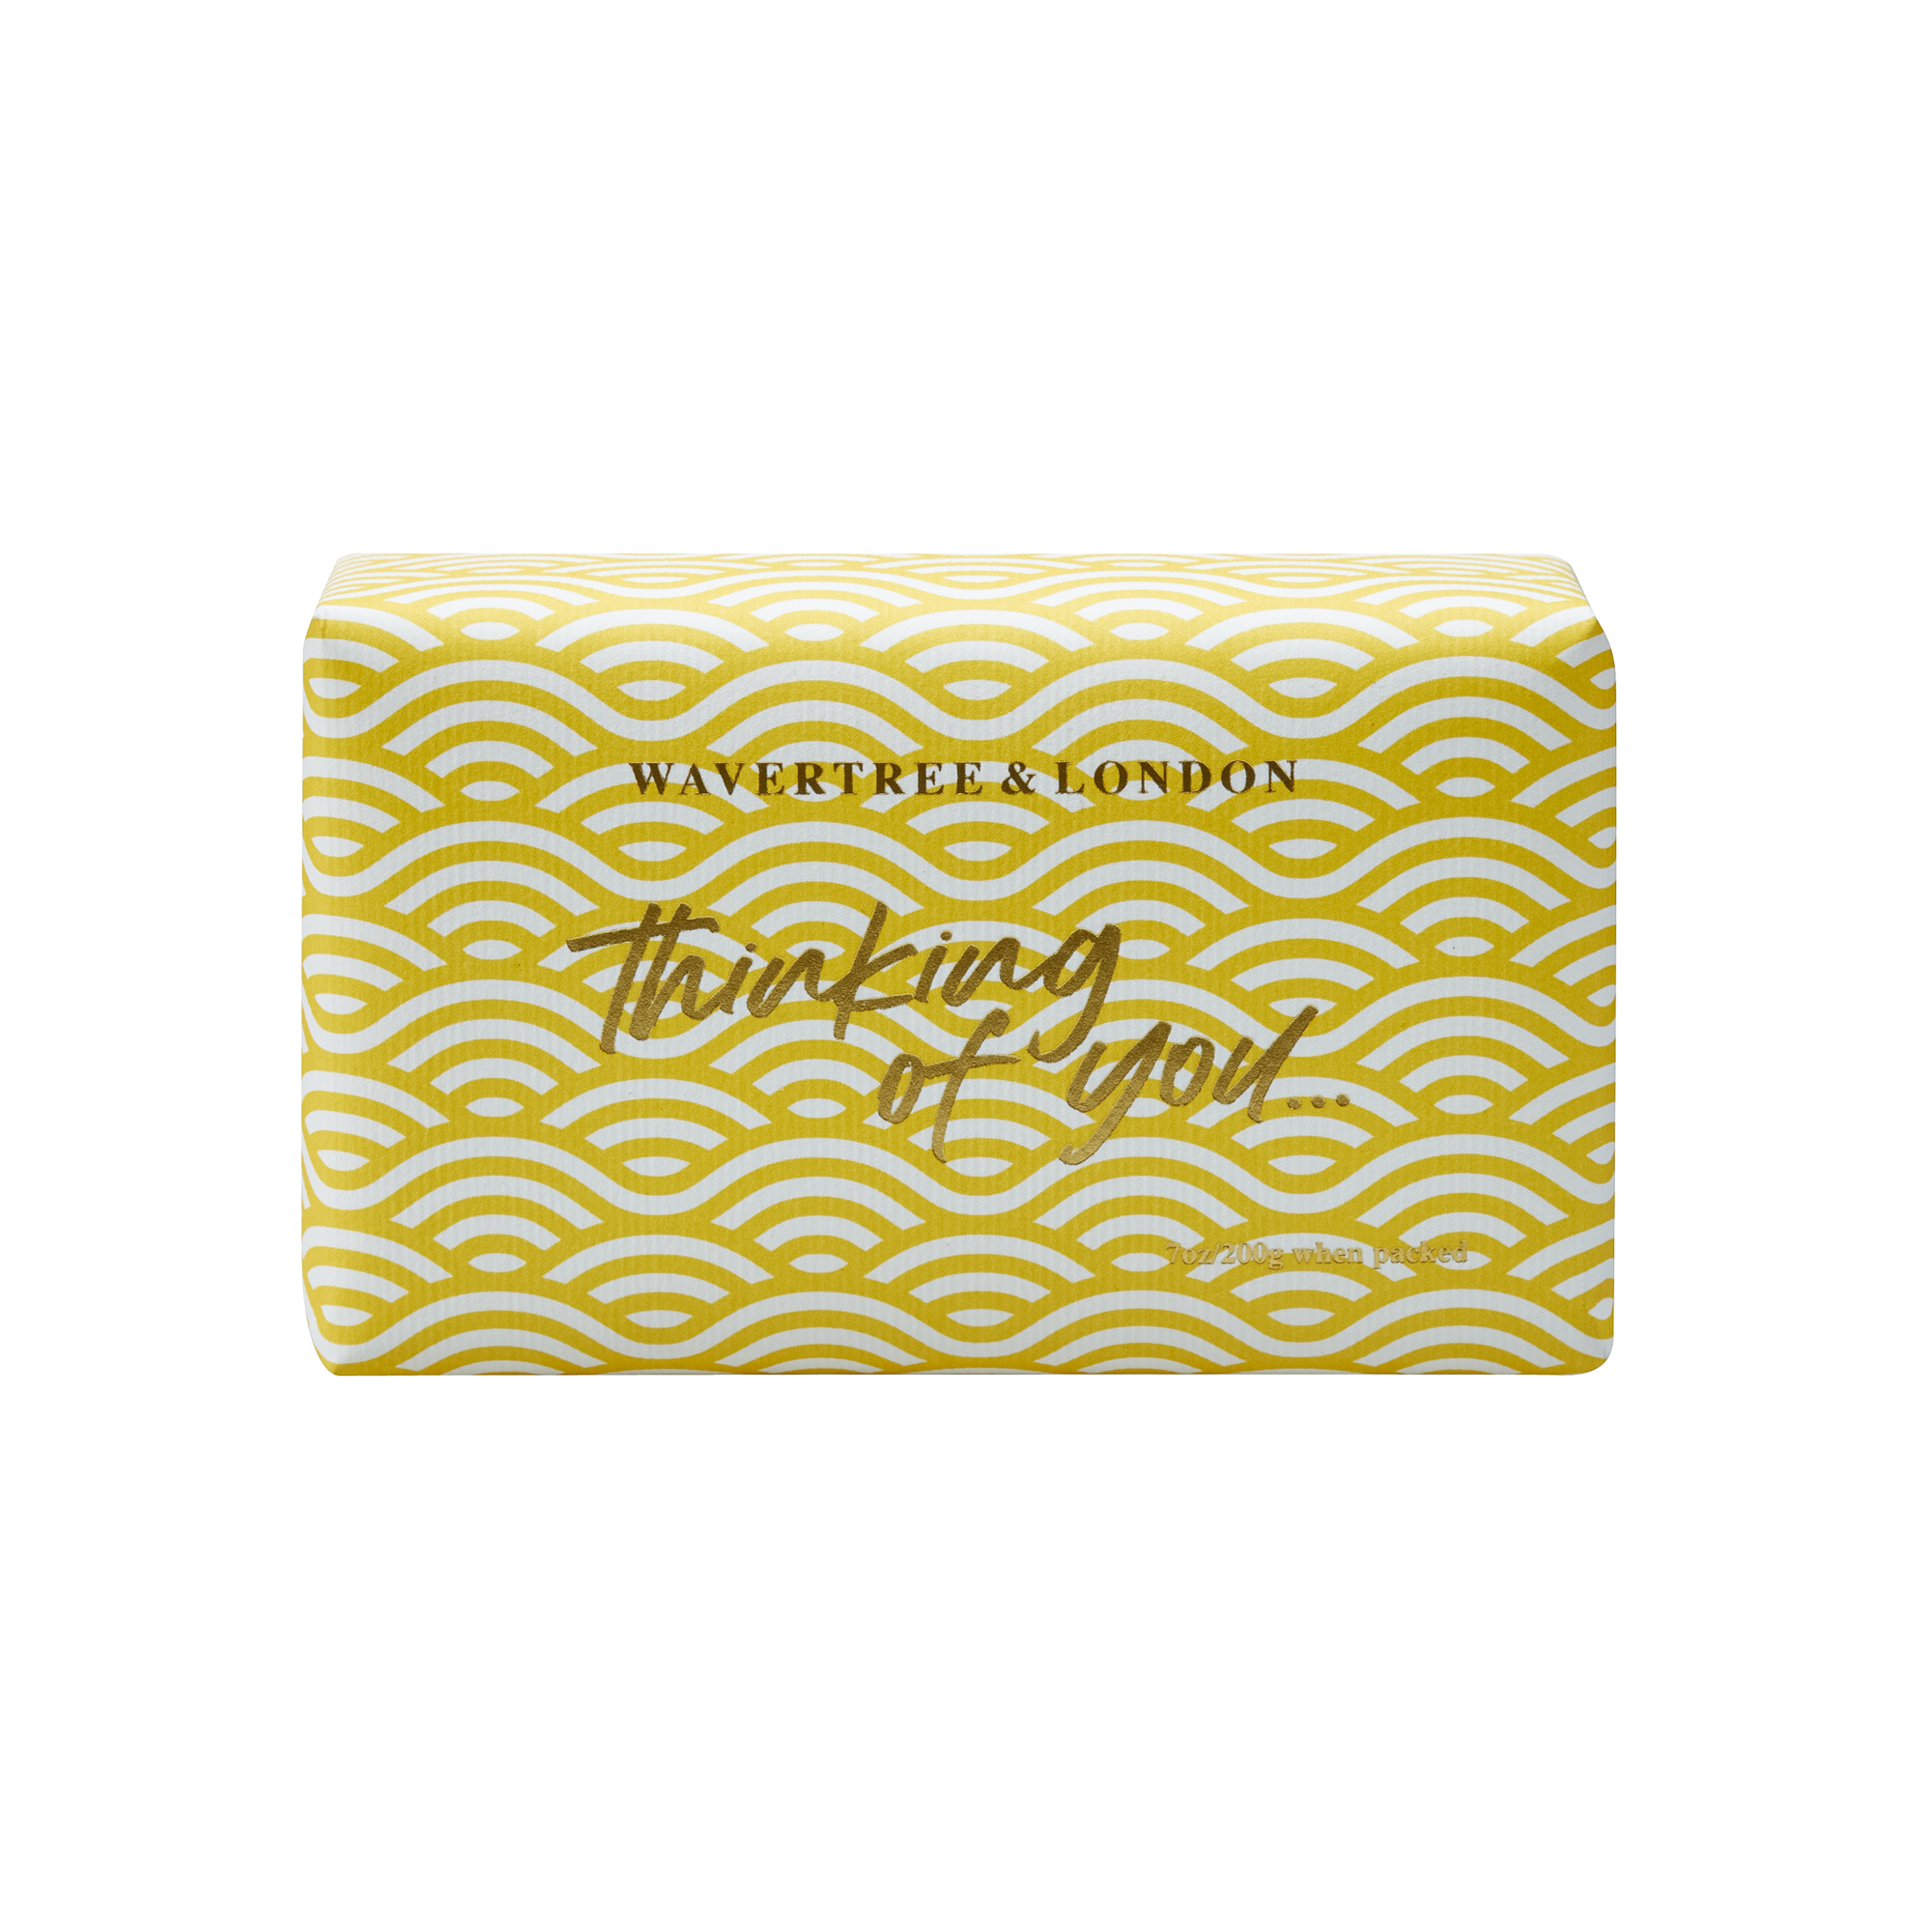 Thinking of You - Yellow - Frangipani and Gardenia Fragrance Soap Bar 200g